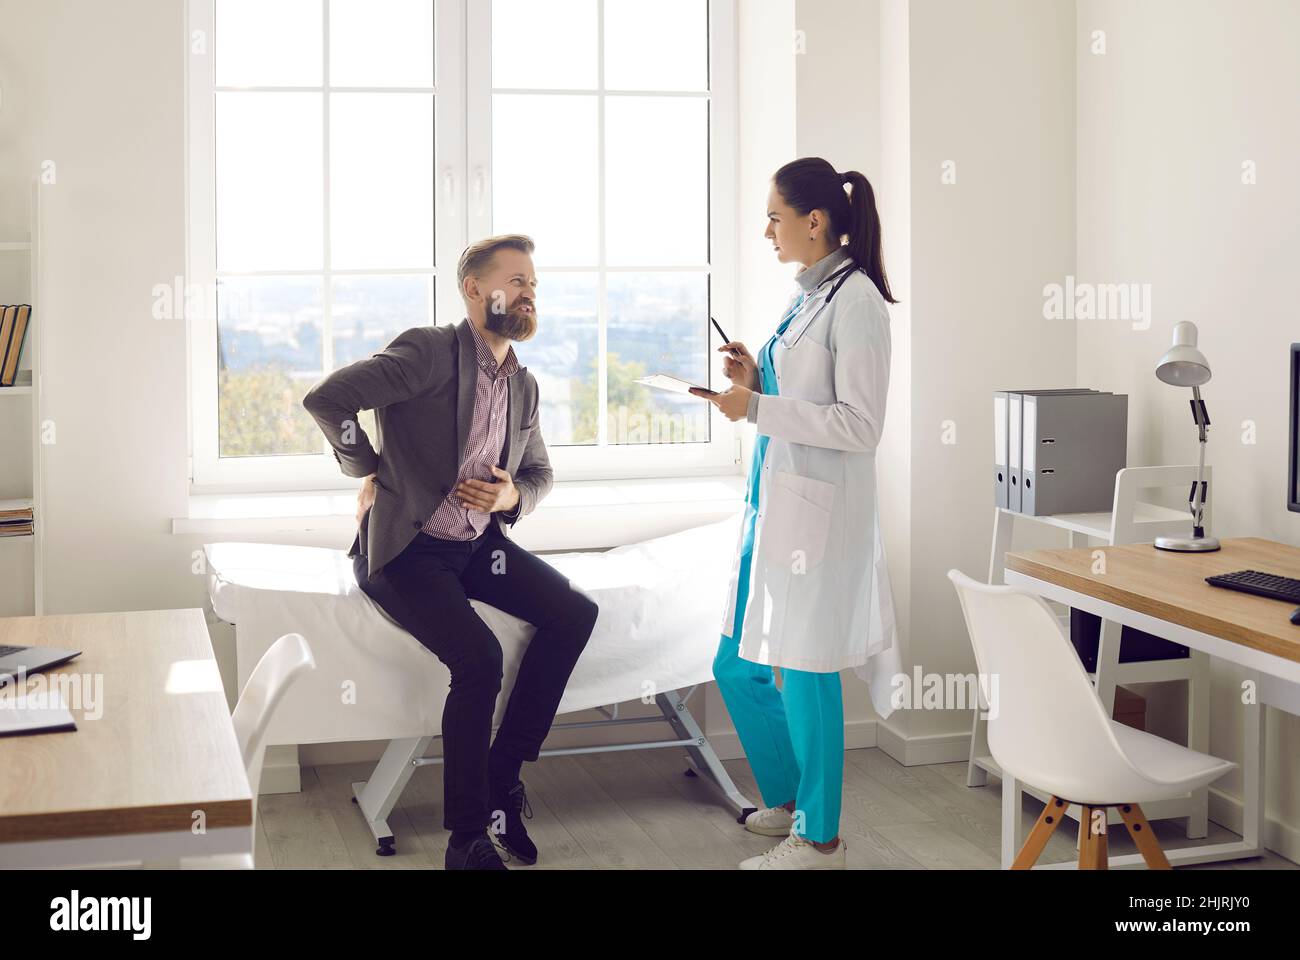 Female doctor examine man having backache or spasm Stock Photo